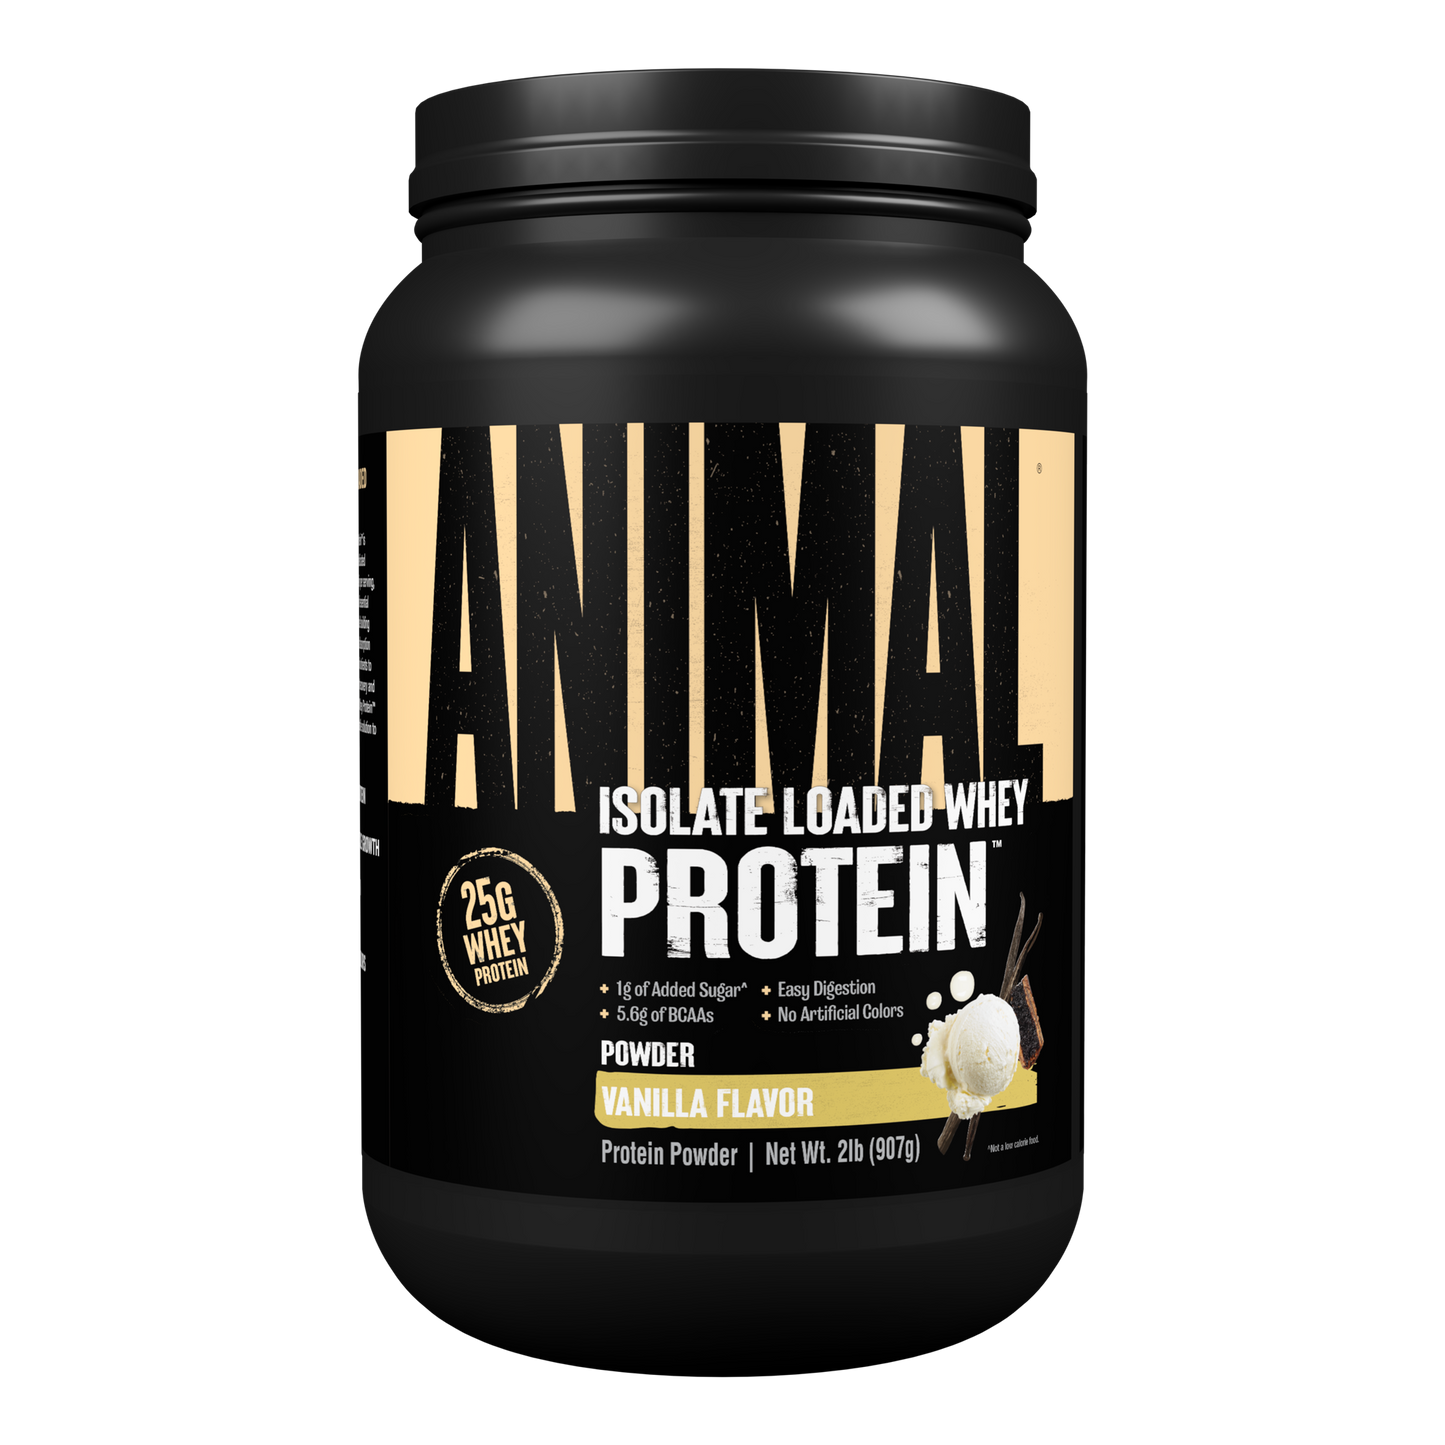 Animal Whey Protein - Vanilla Flavor 2lb